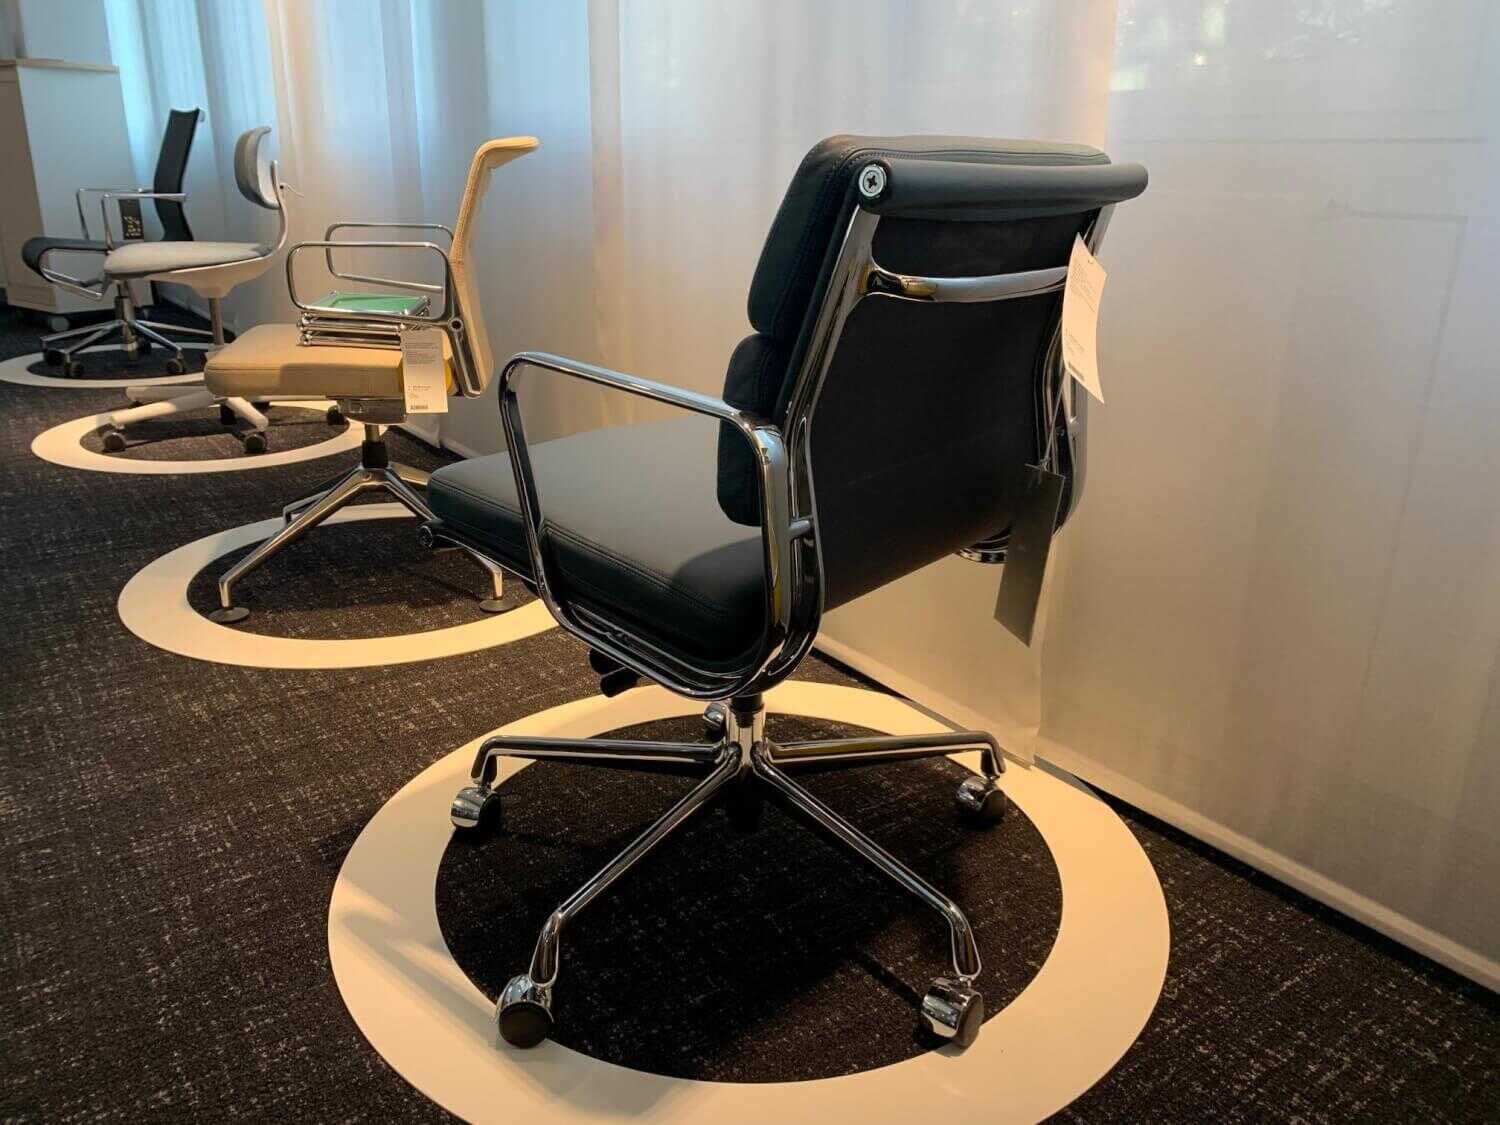 Soft Pad Chair EA 217 Bürostuhl von Vitra